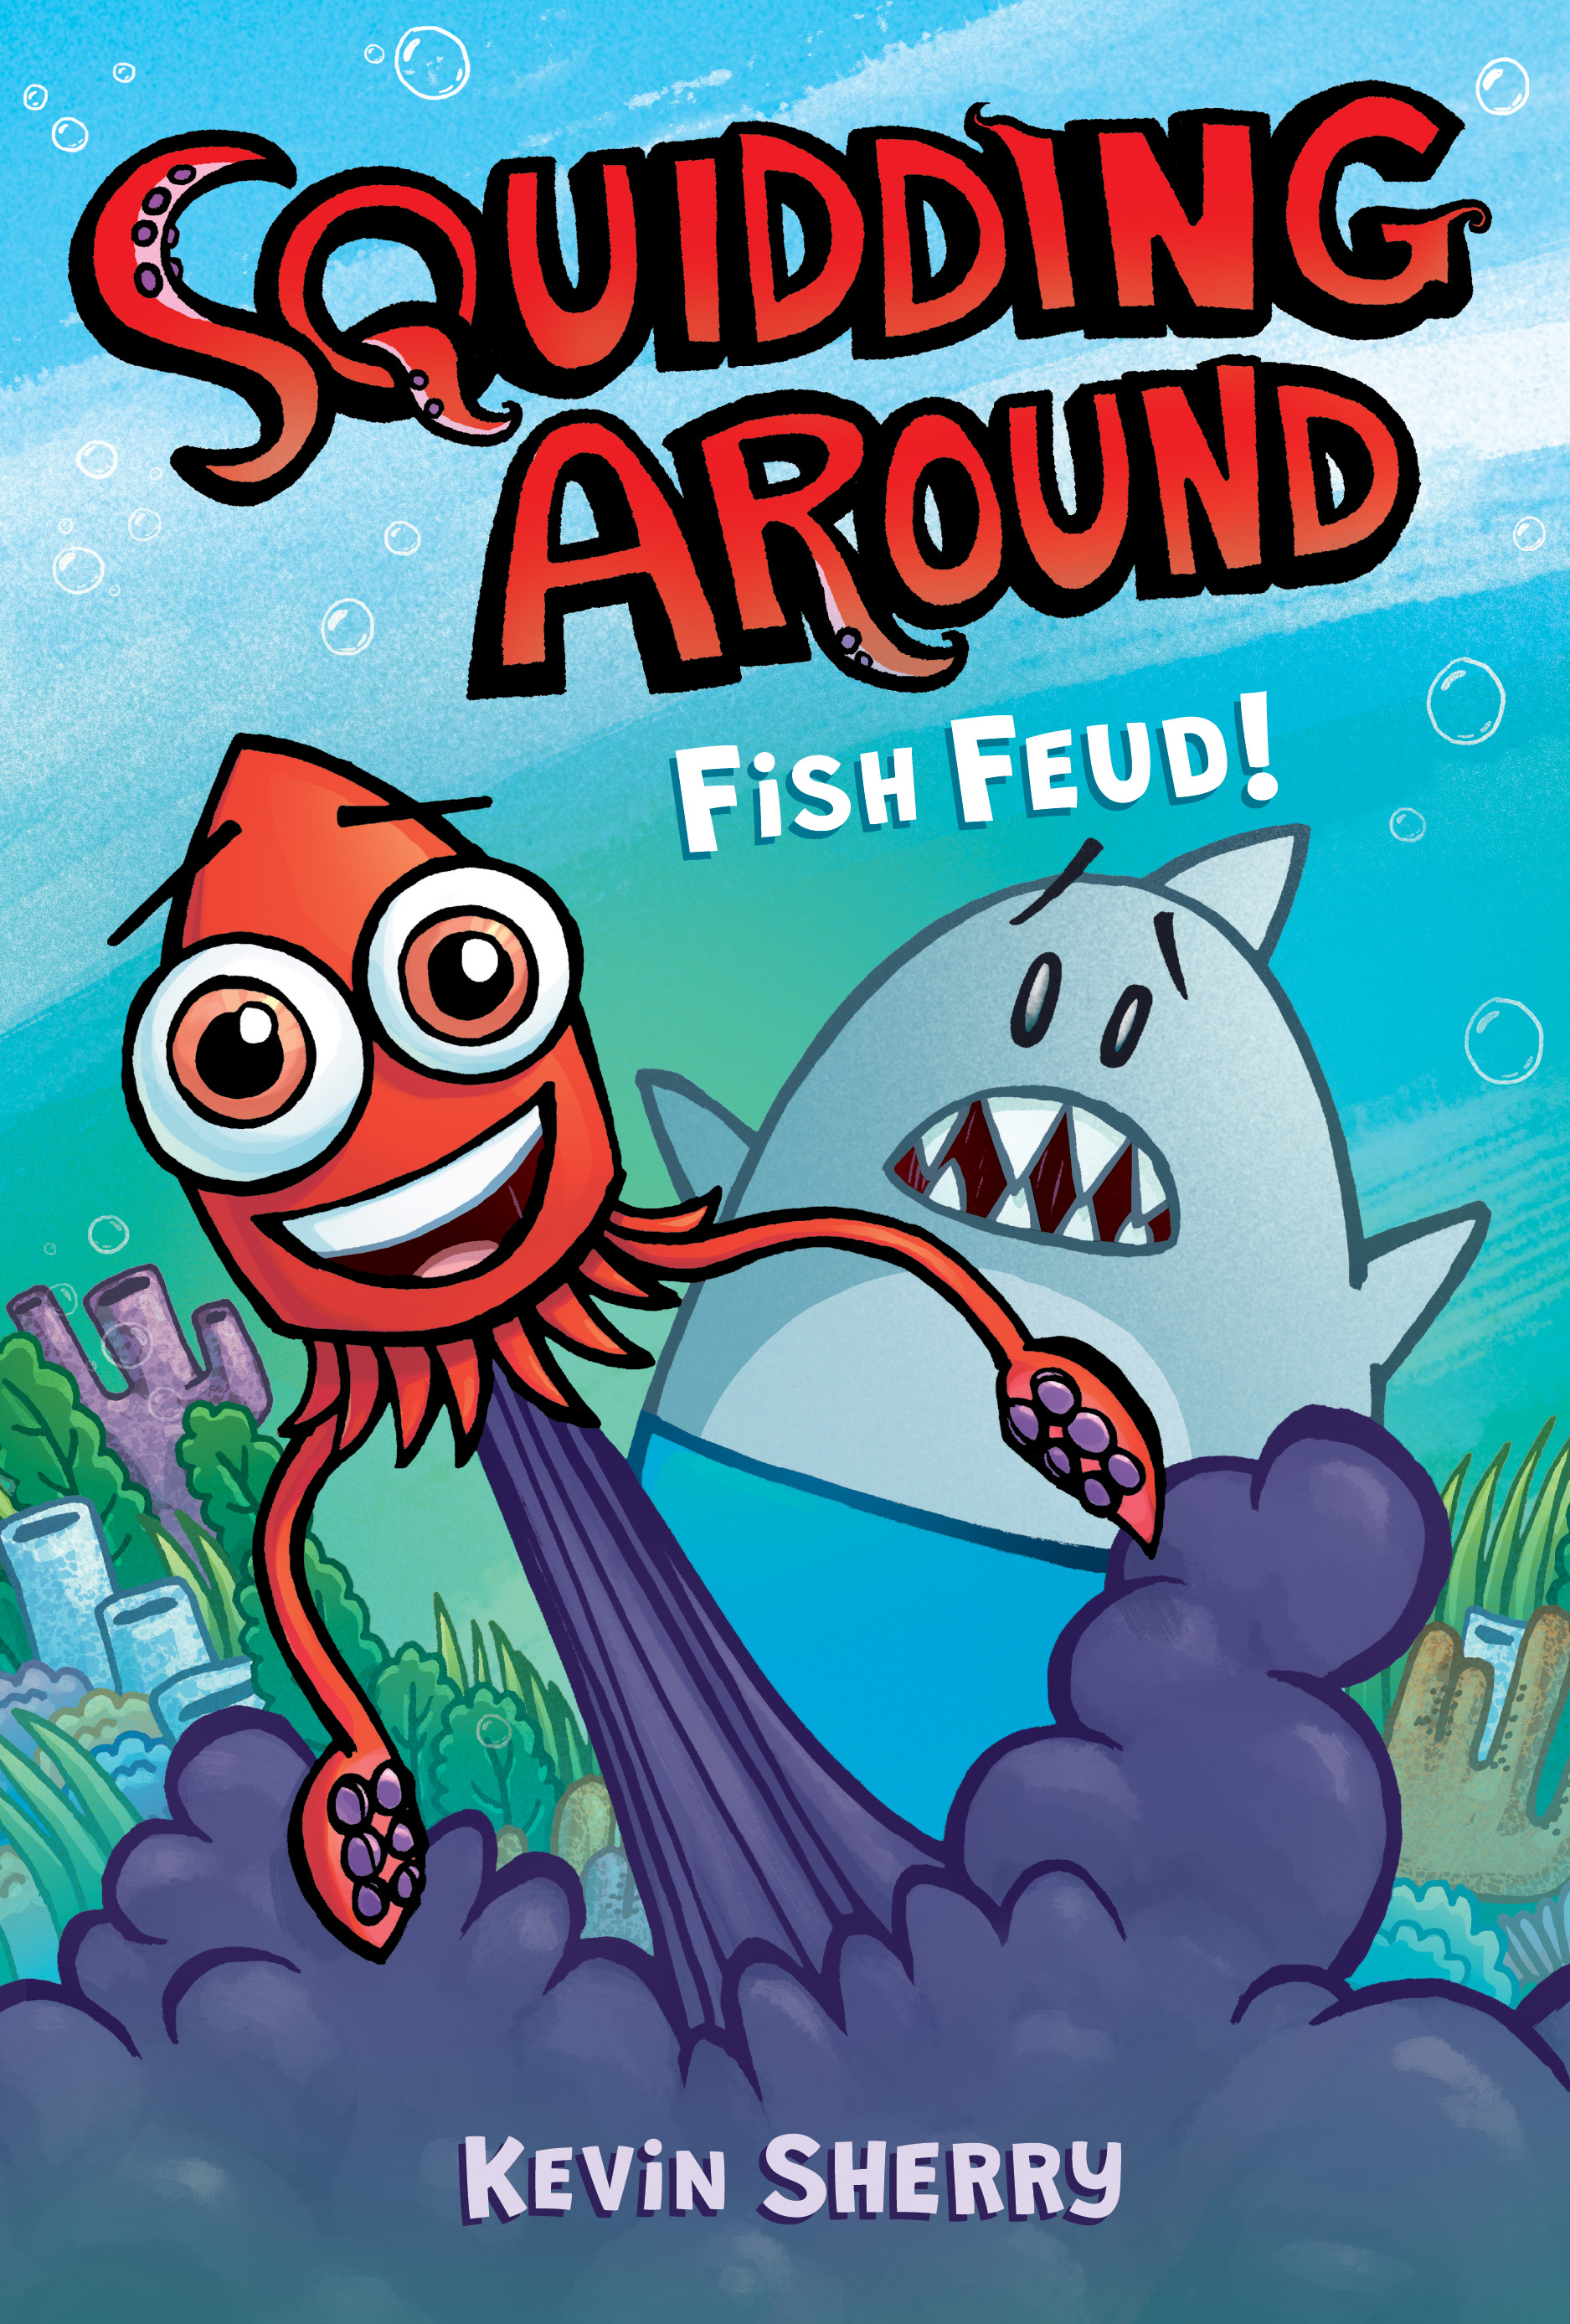 Squidding Around: Fish Feud